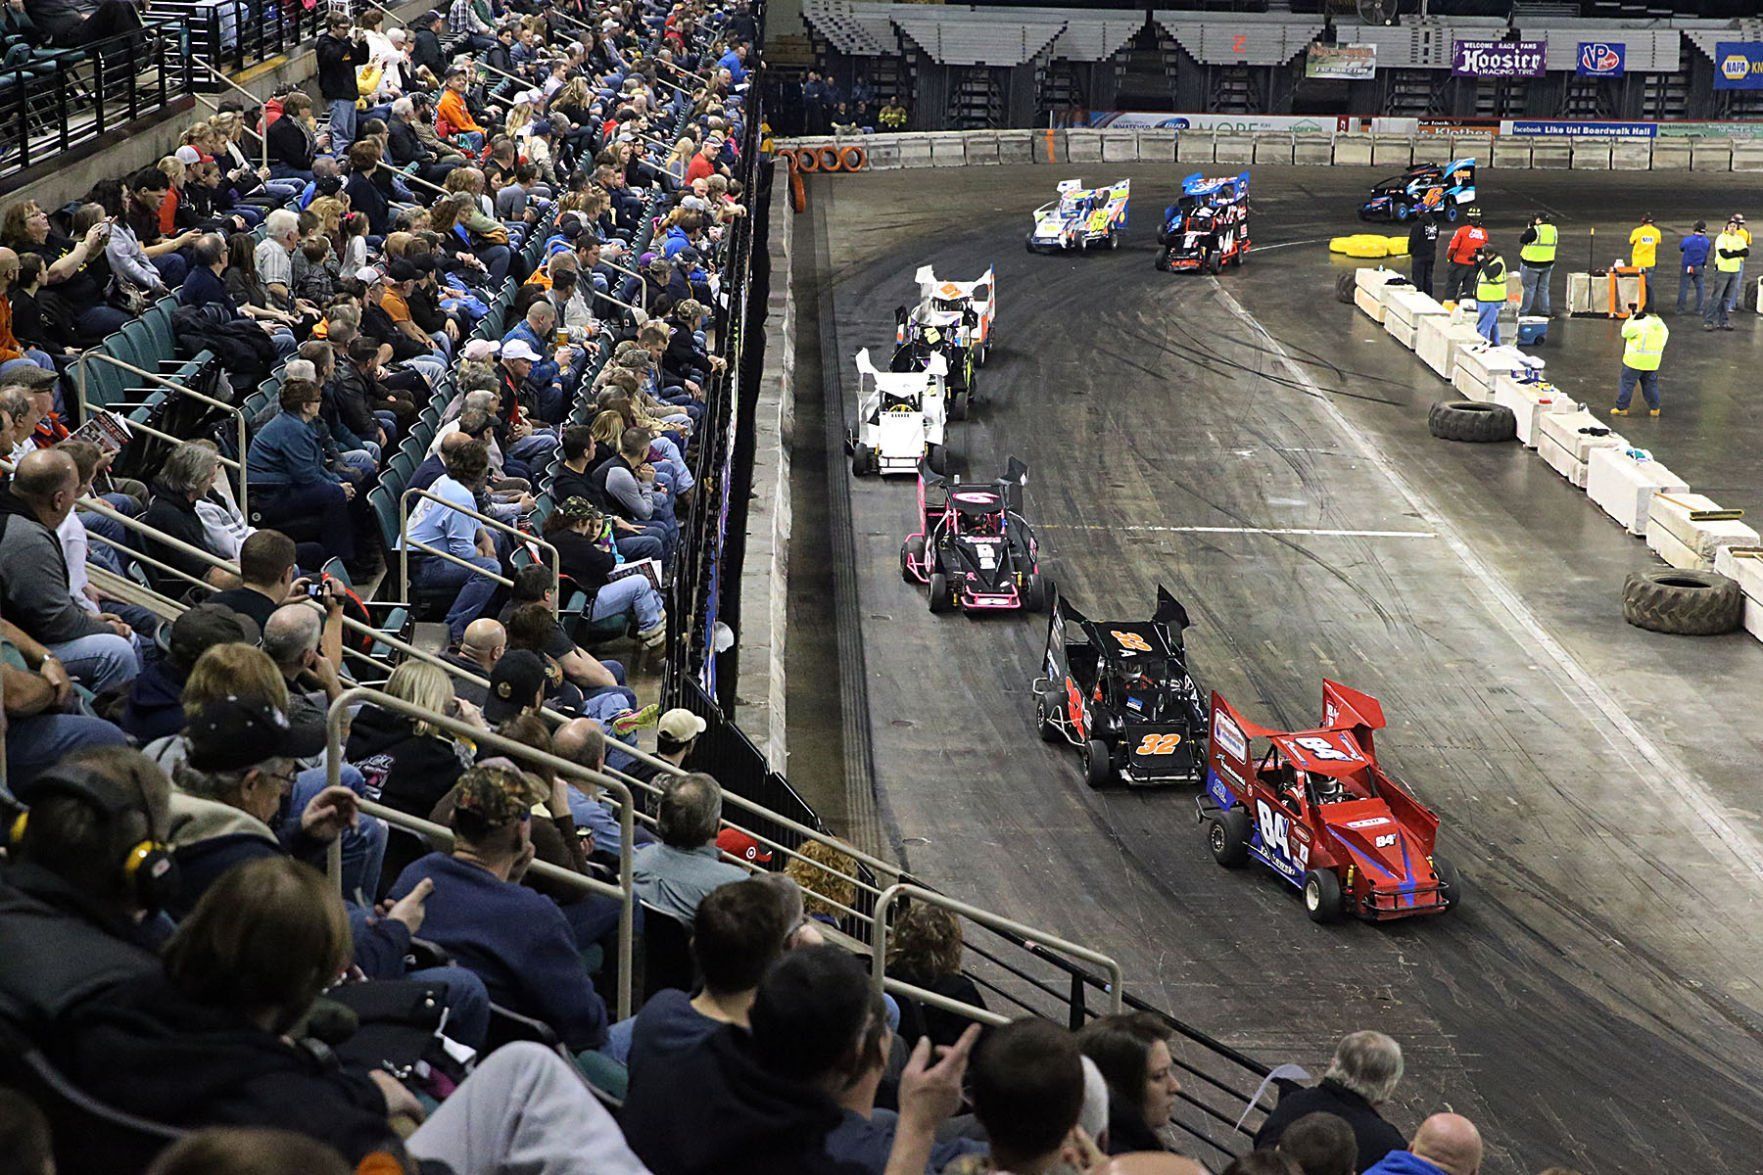 Atlantic city indoor midget car racing